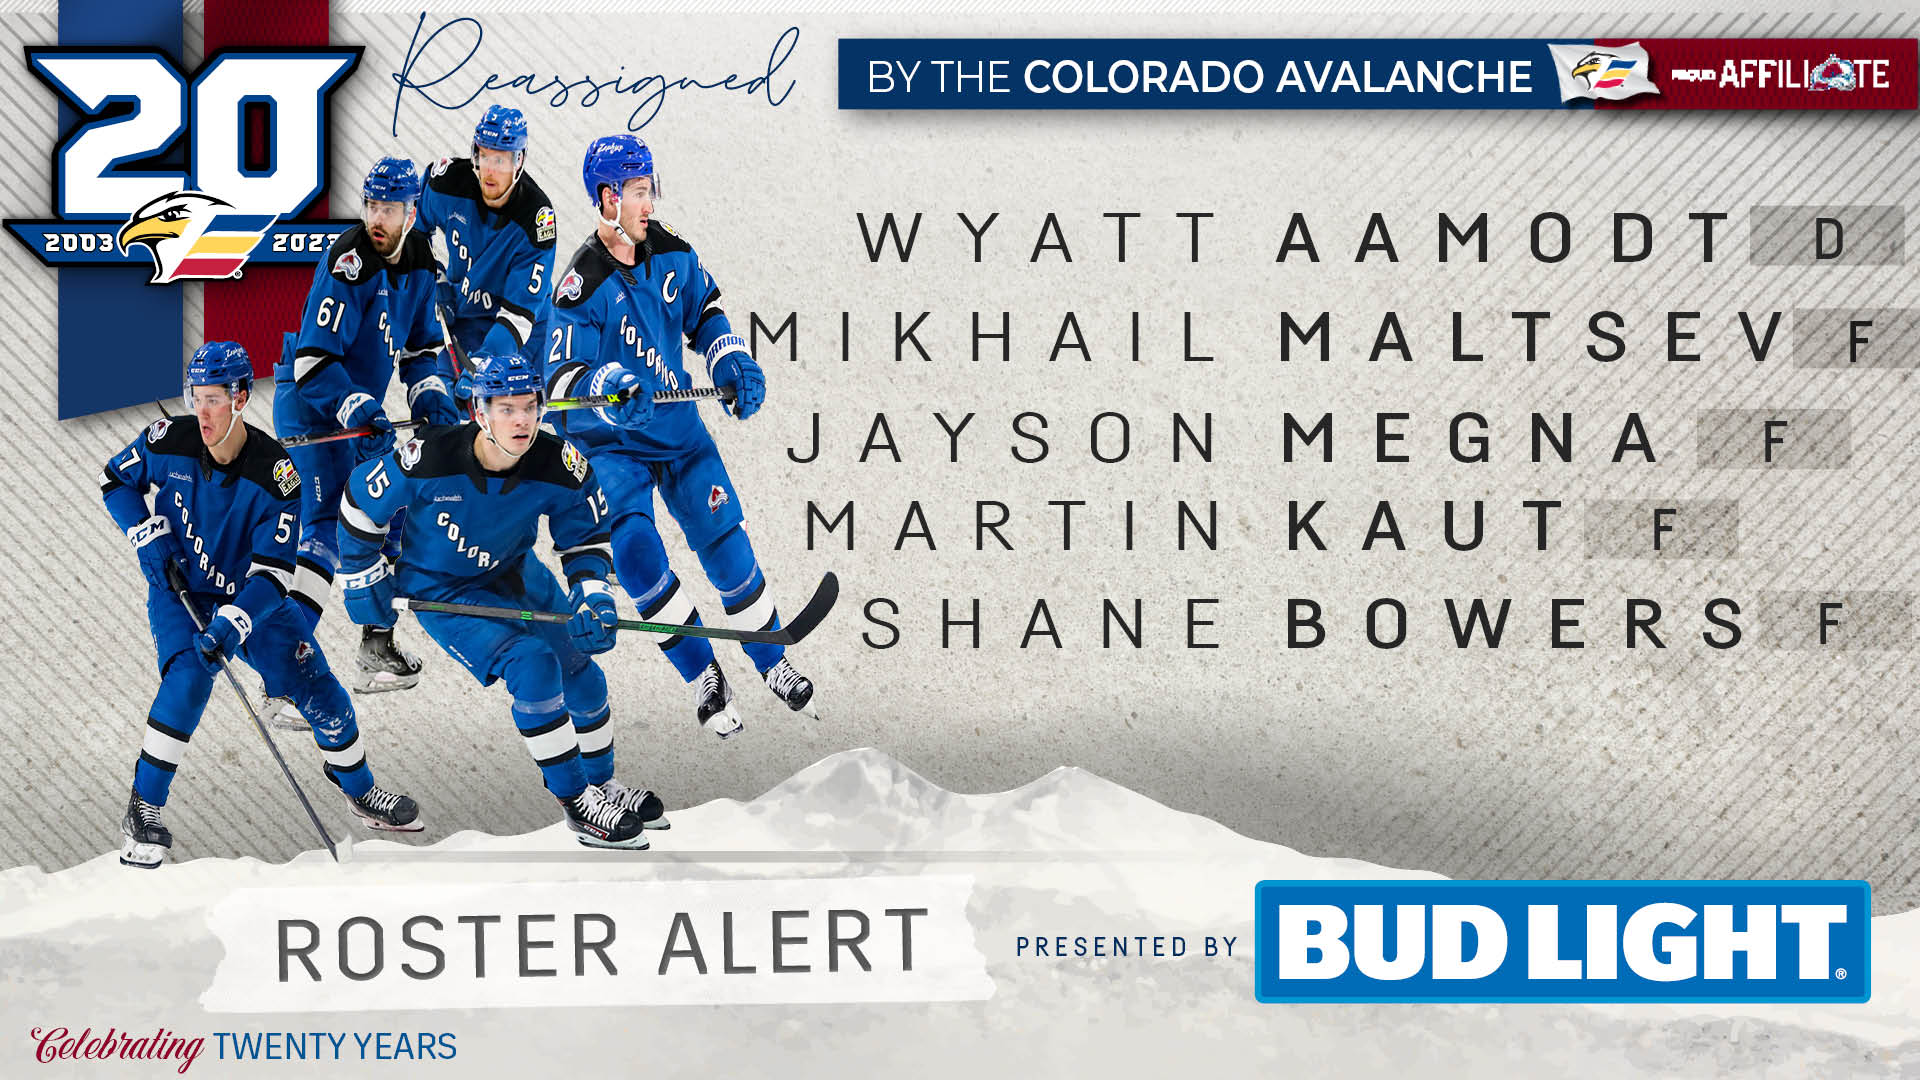 Colorado Eagles - ROSTER ALERT: The Colorado Avalanche